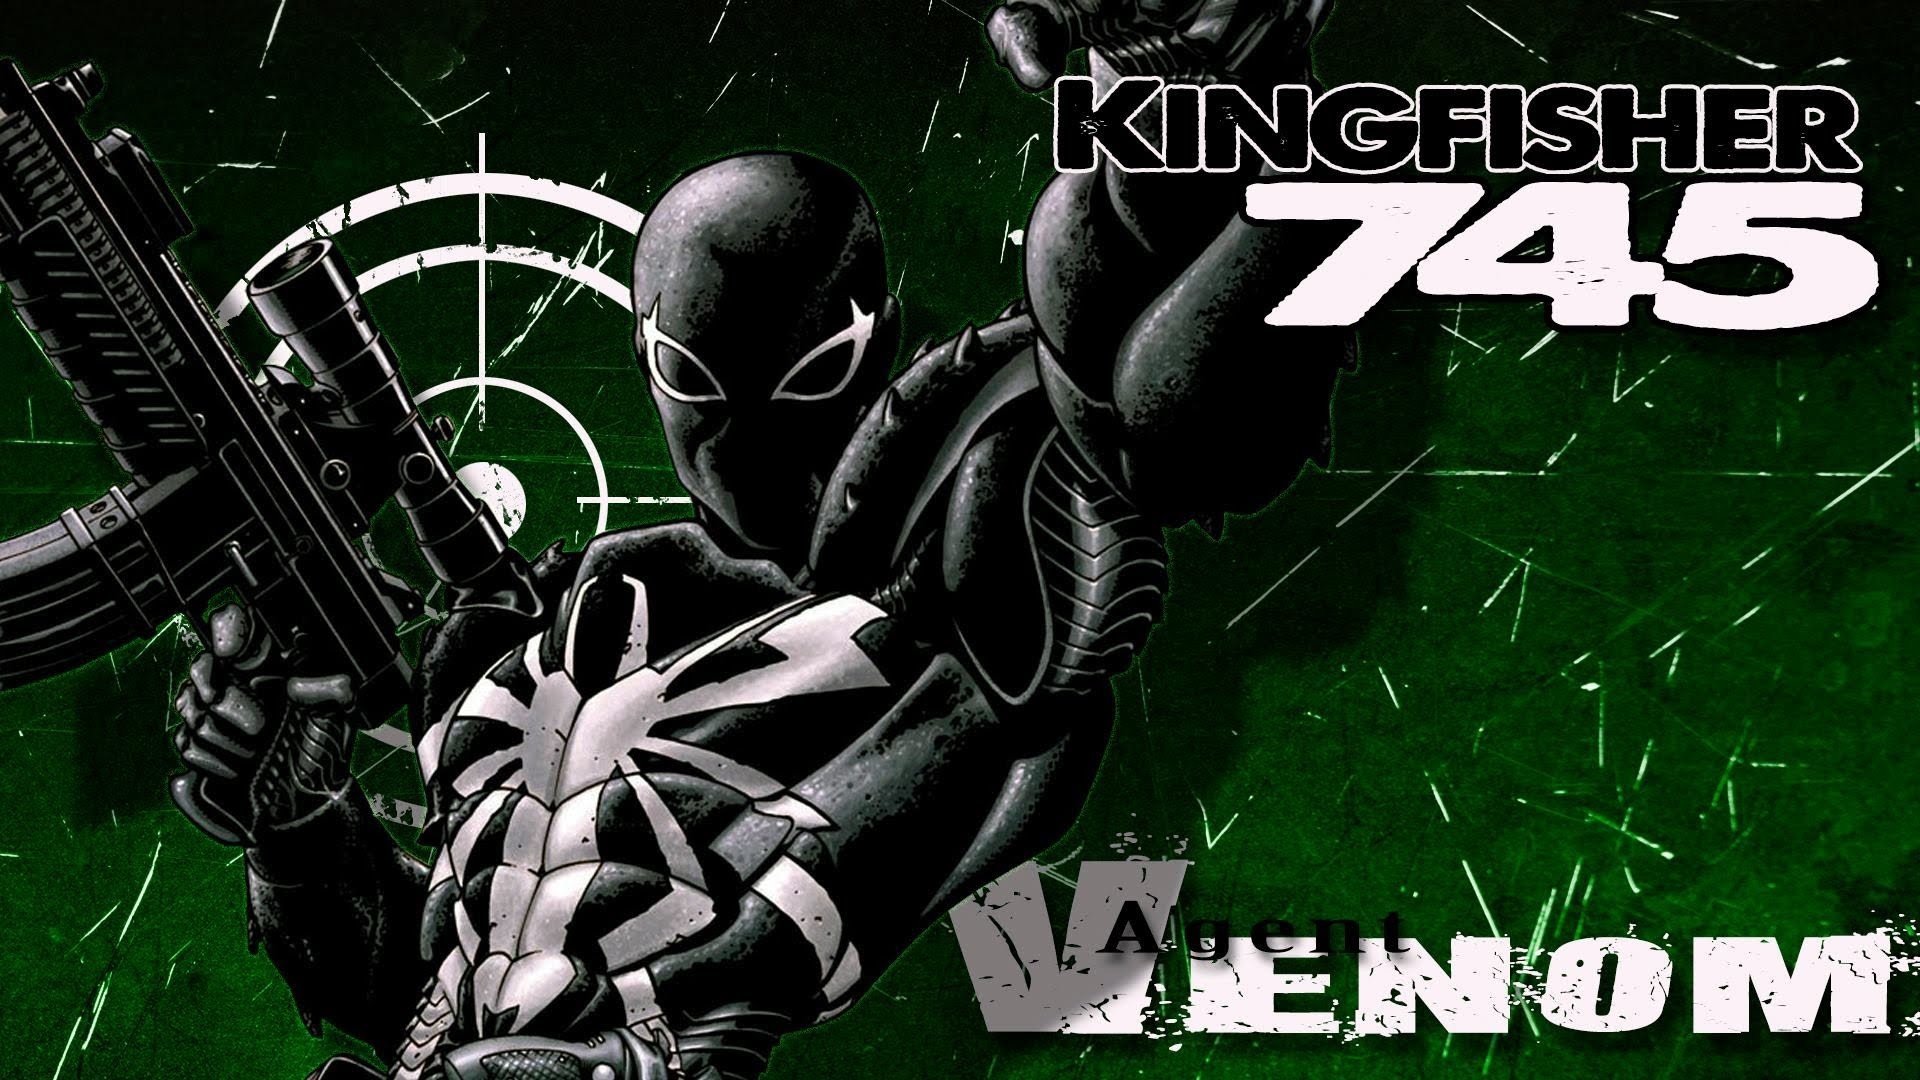 Marvel Avengers Alliance: Agent Venom PvP Gameplay at Level 7 – YouTube